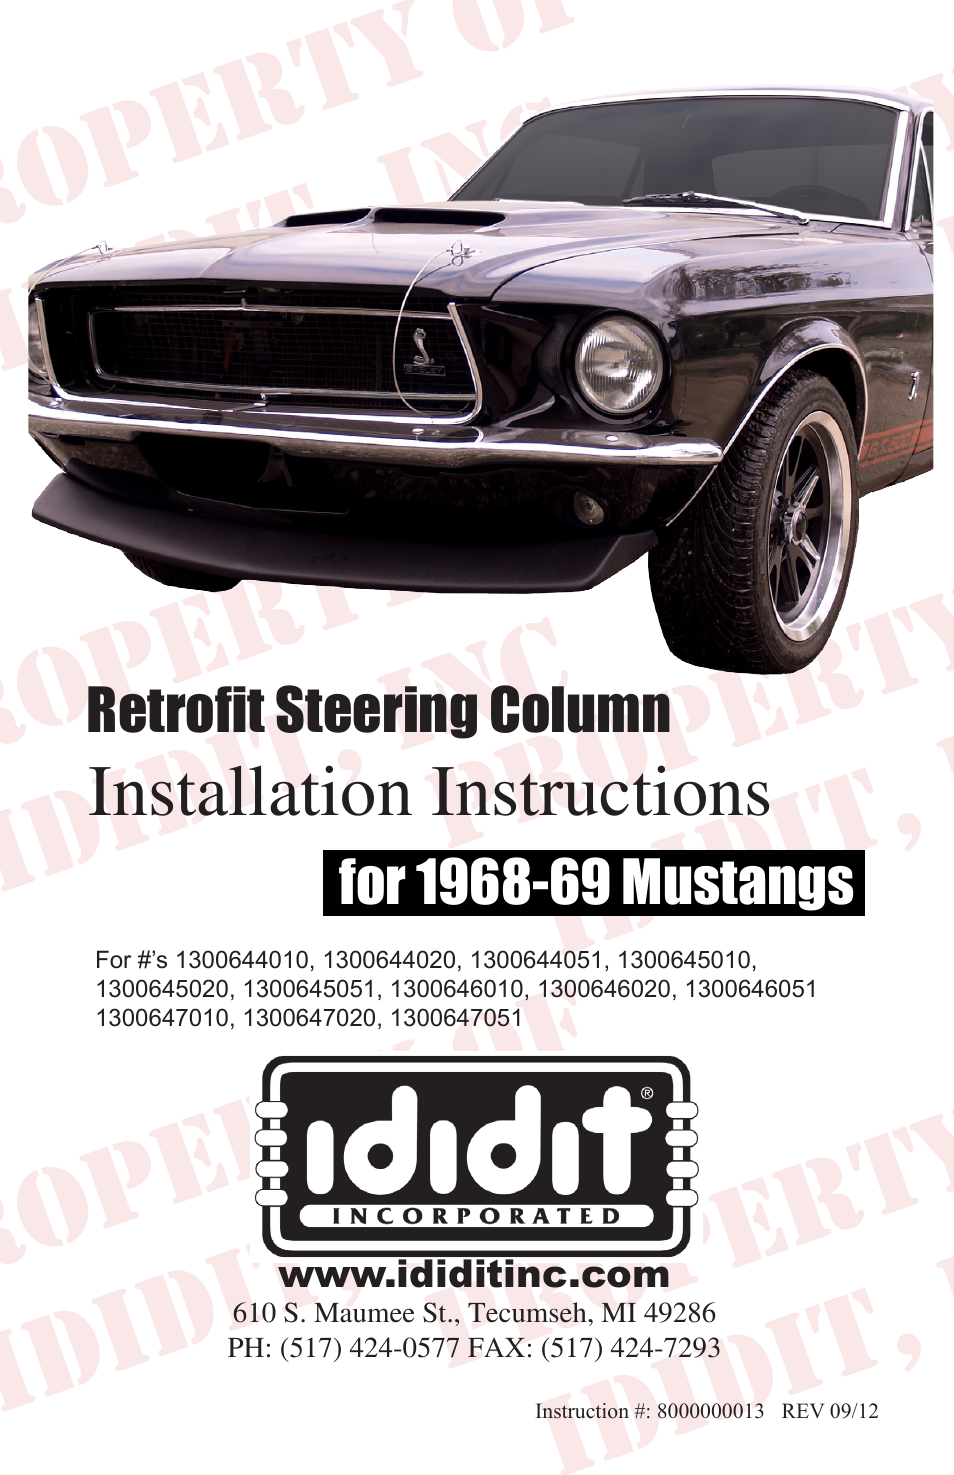 Retrofit Steering Column: 1968-69 Mustang